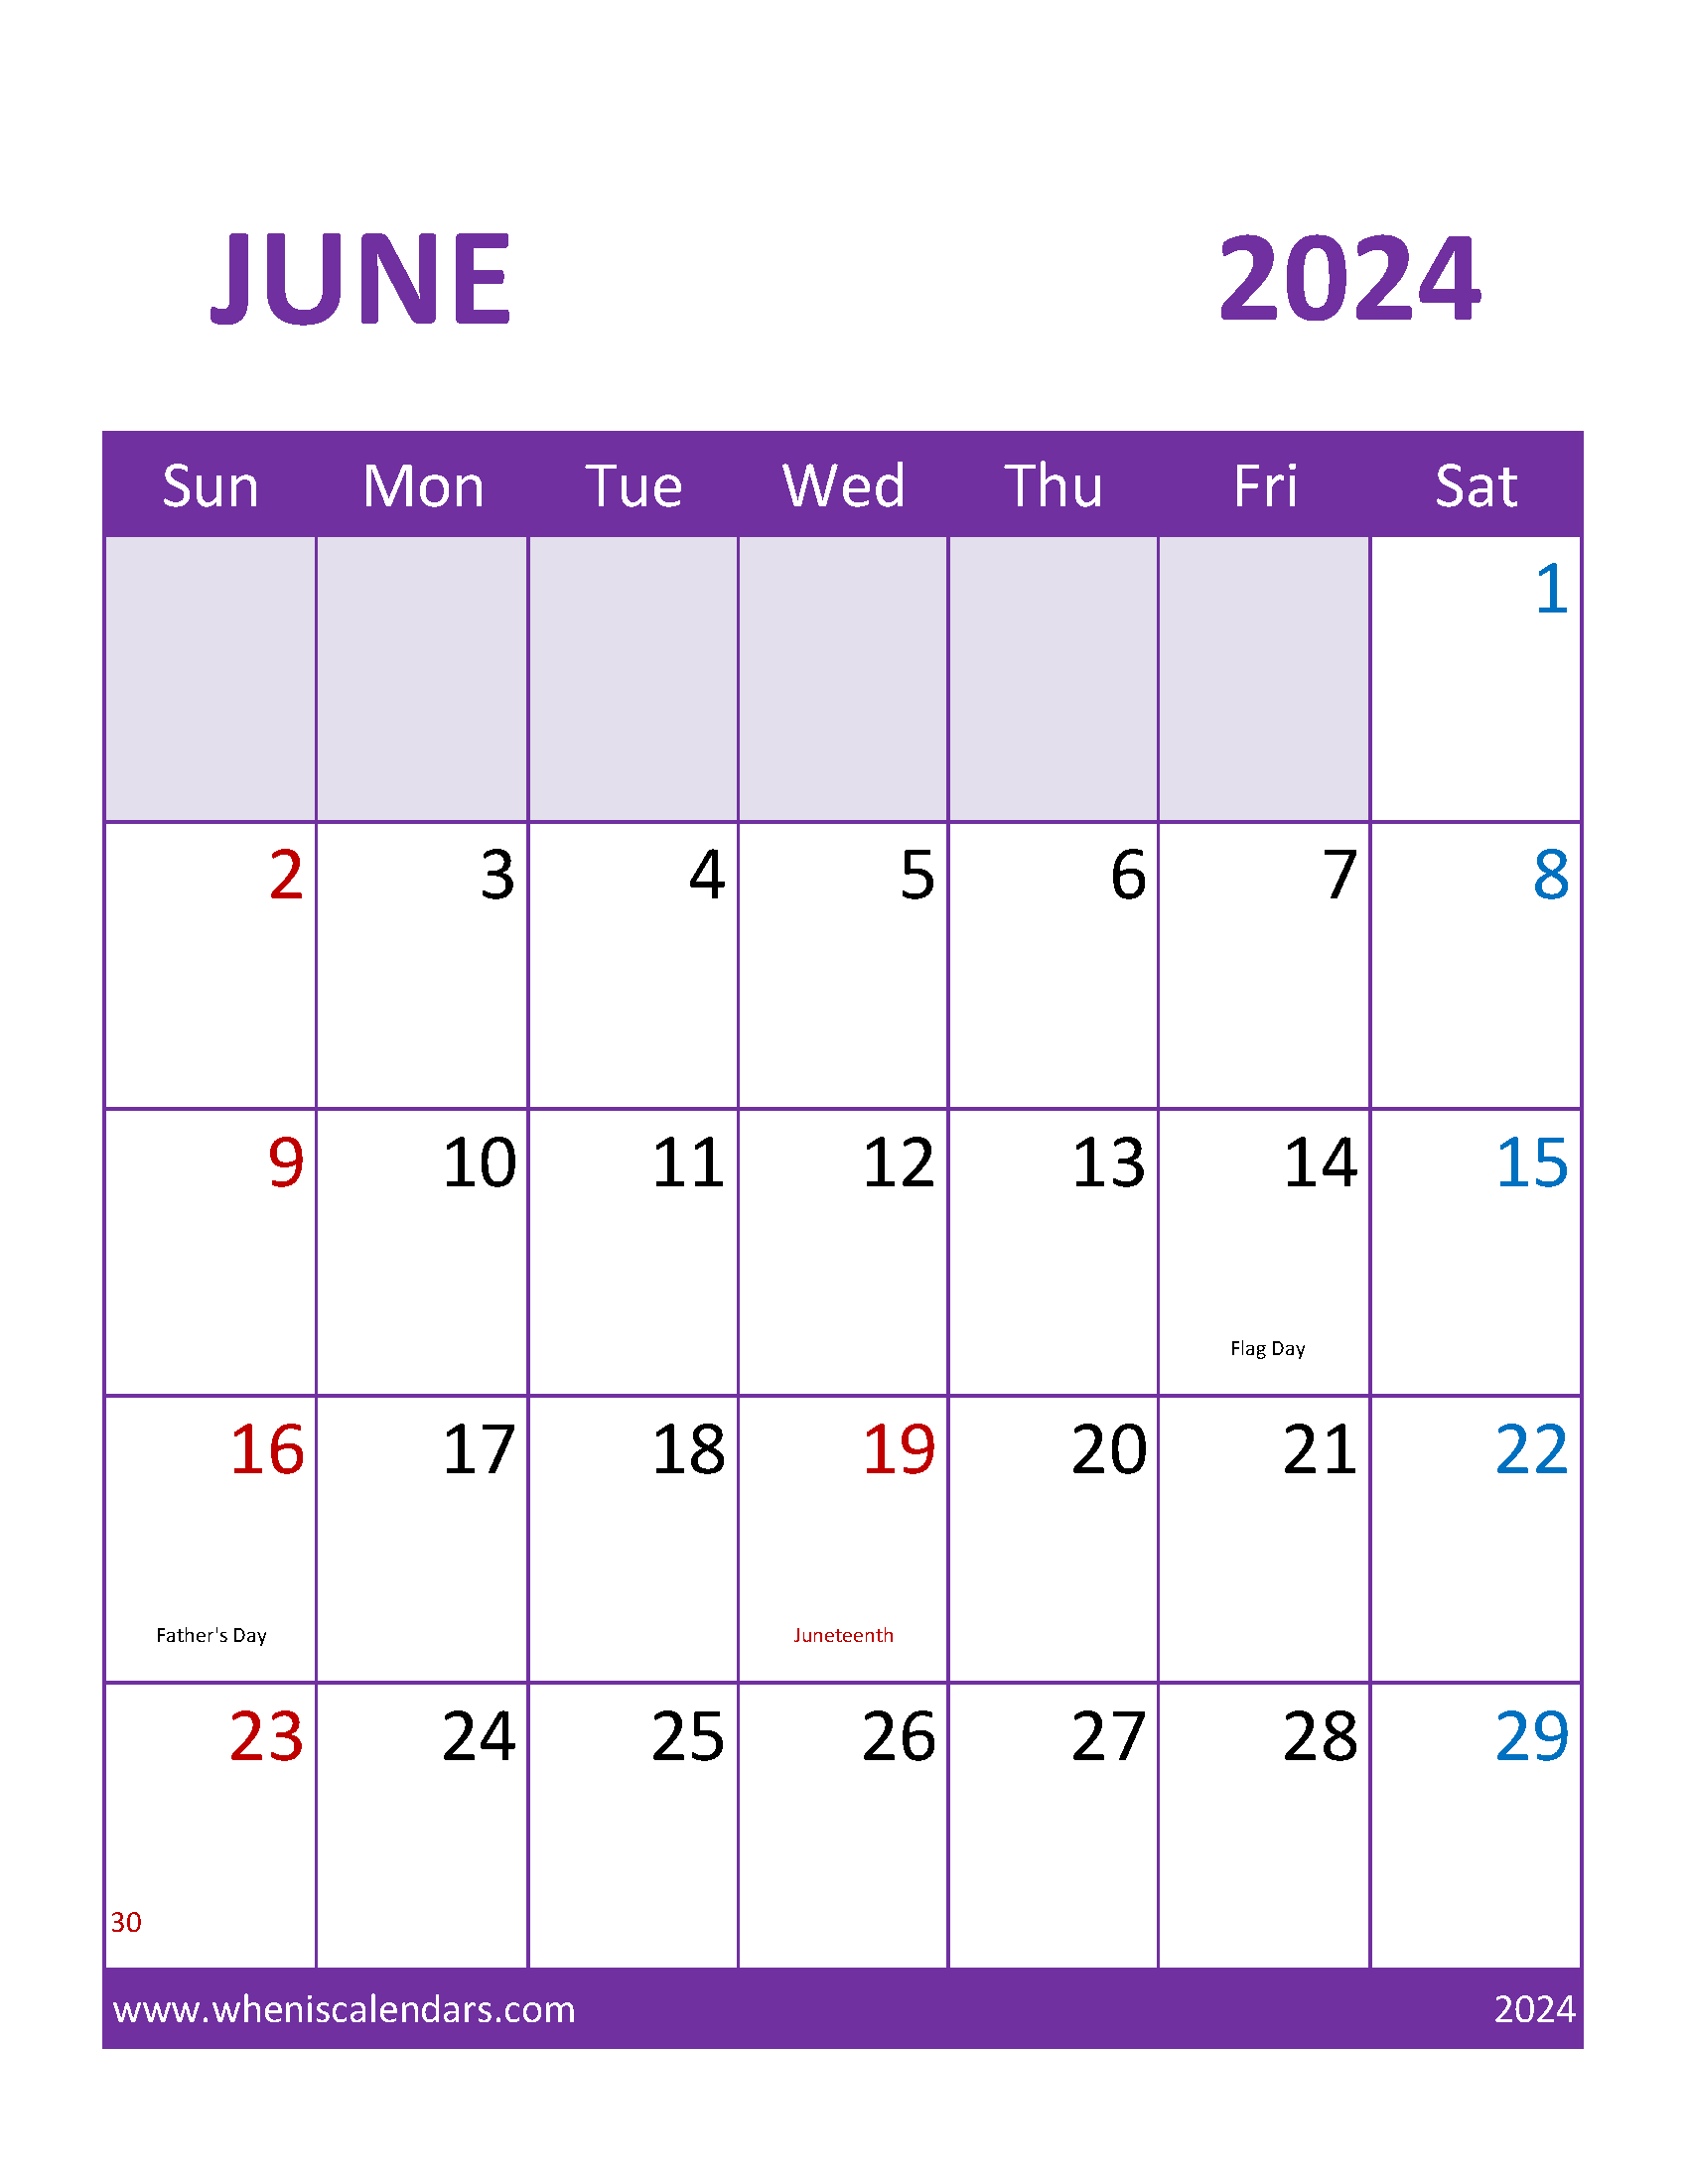 Free June 2024 Calendar Template